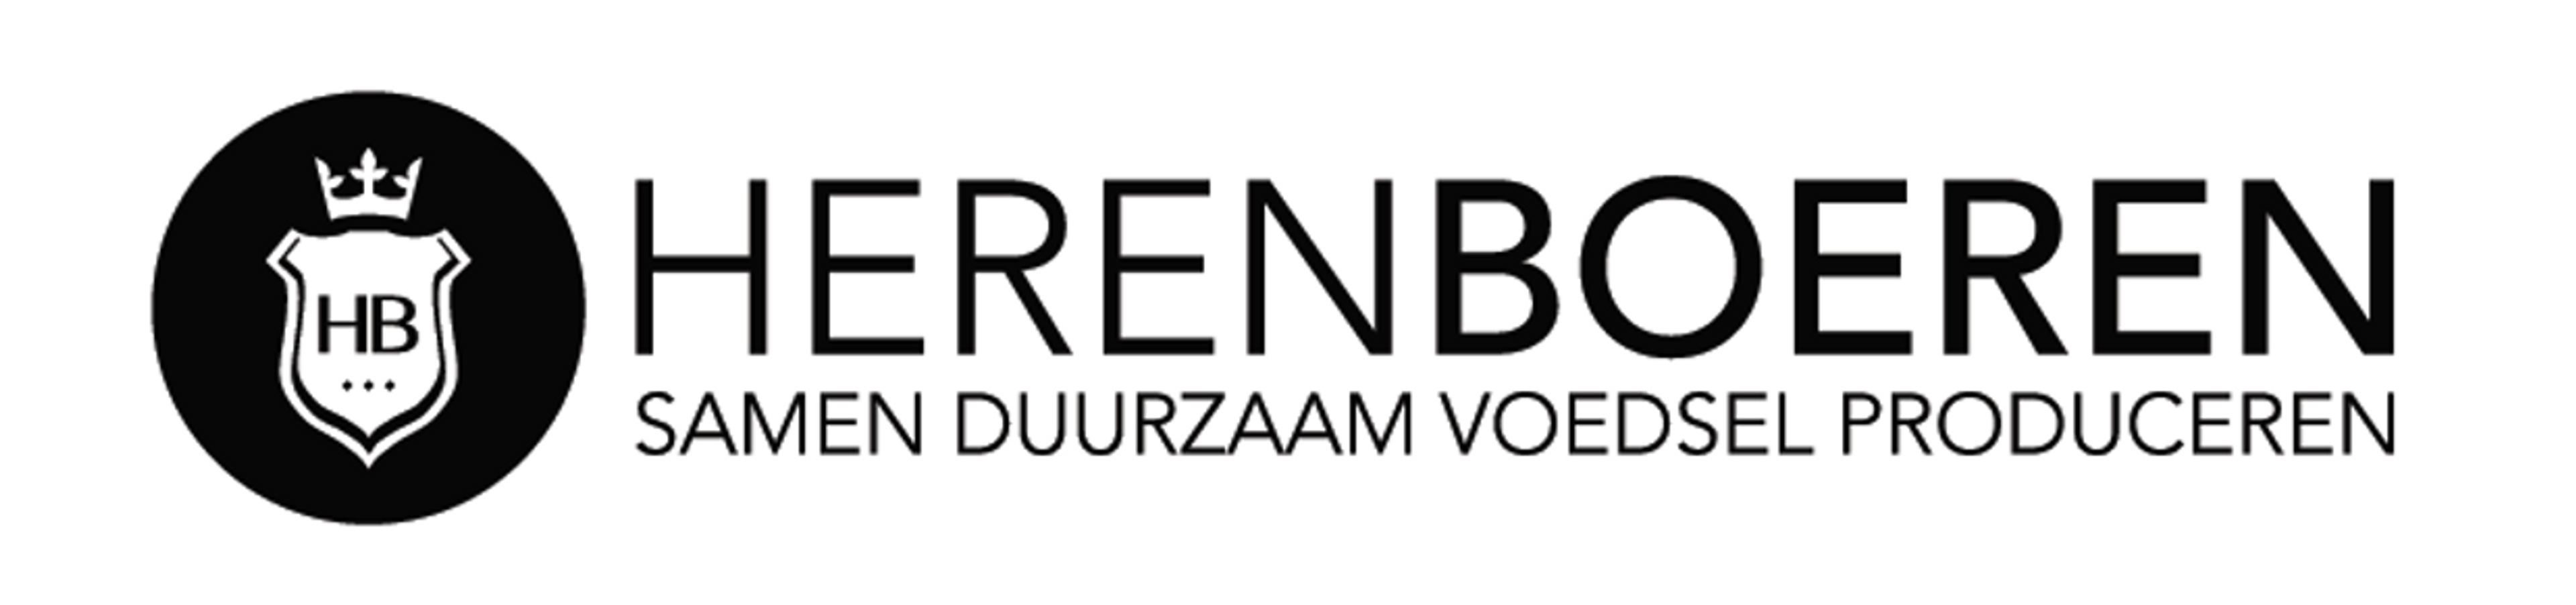 Herenboeren NL logo